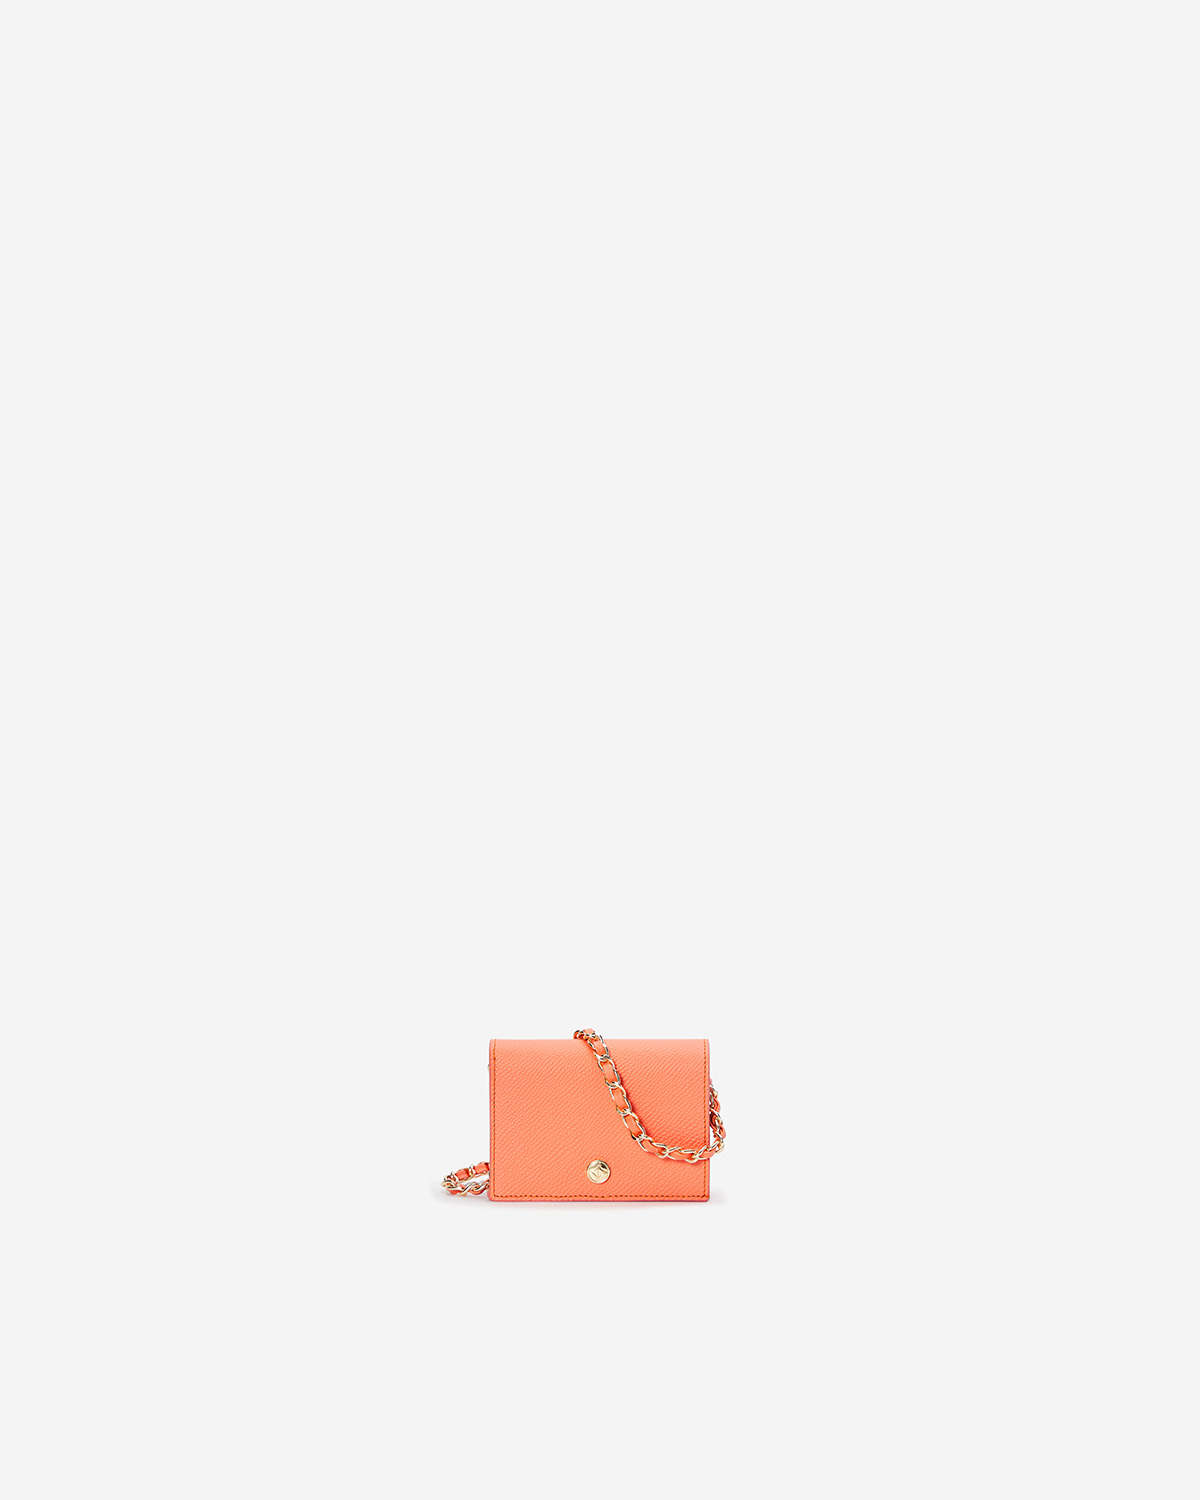 VERA Emily Flap Wallet with Leather Braided Gold Chain in Joyful Orange กระเป๋าสตางค์หนังแท้ แบบเปิดฝา พร้อมสายโซ่สีทองร้อยหนัง สีส้ม